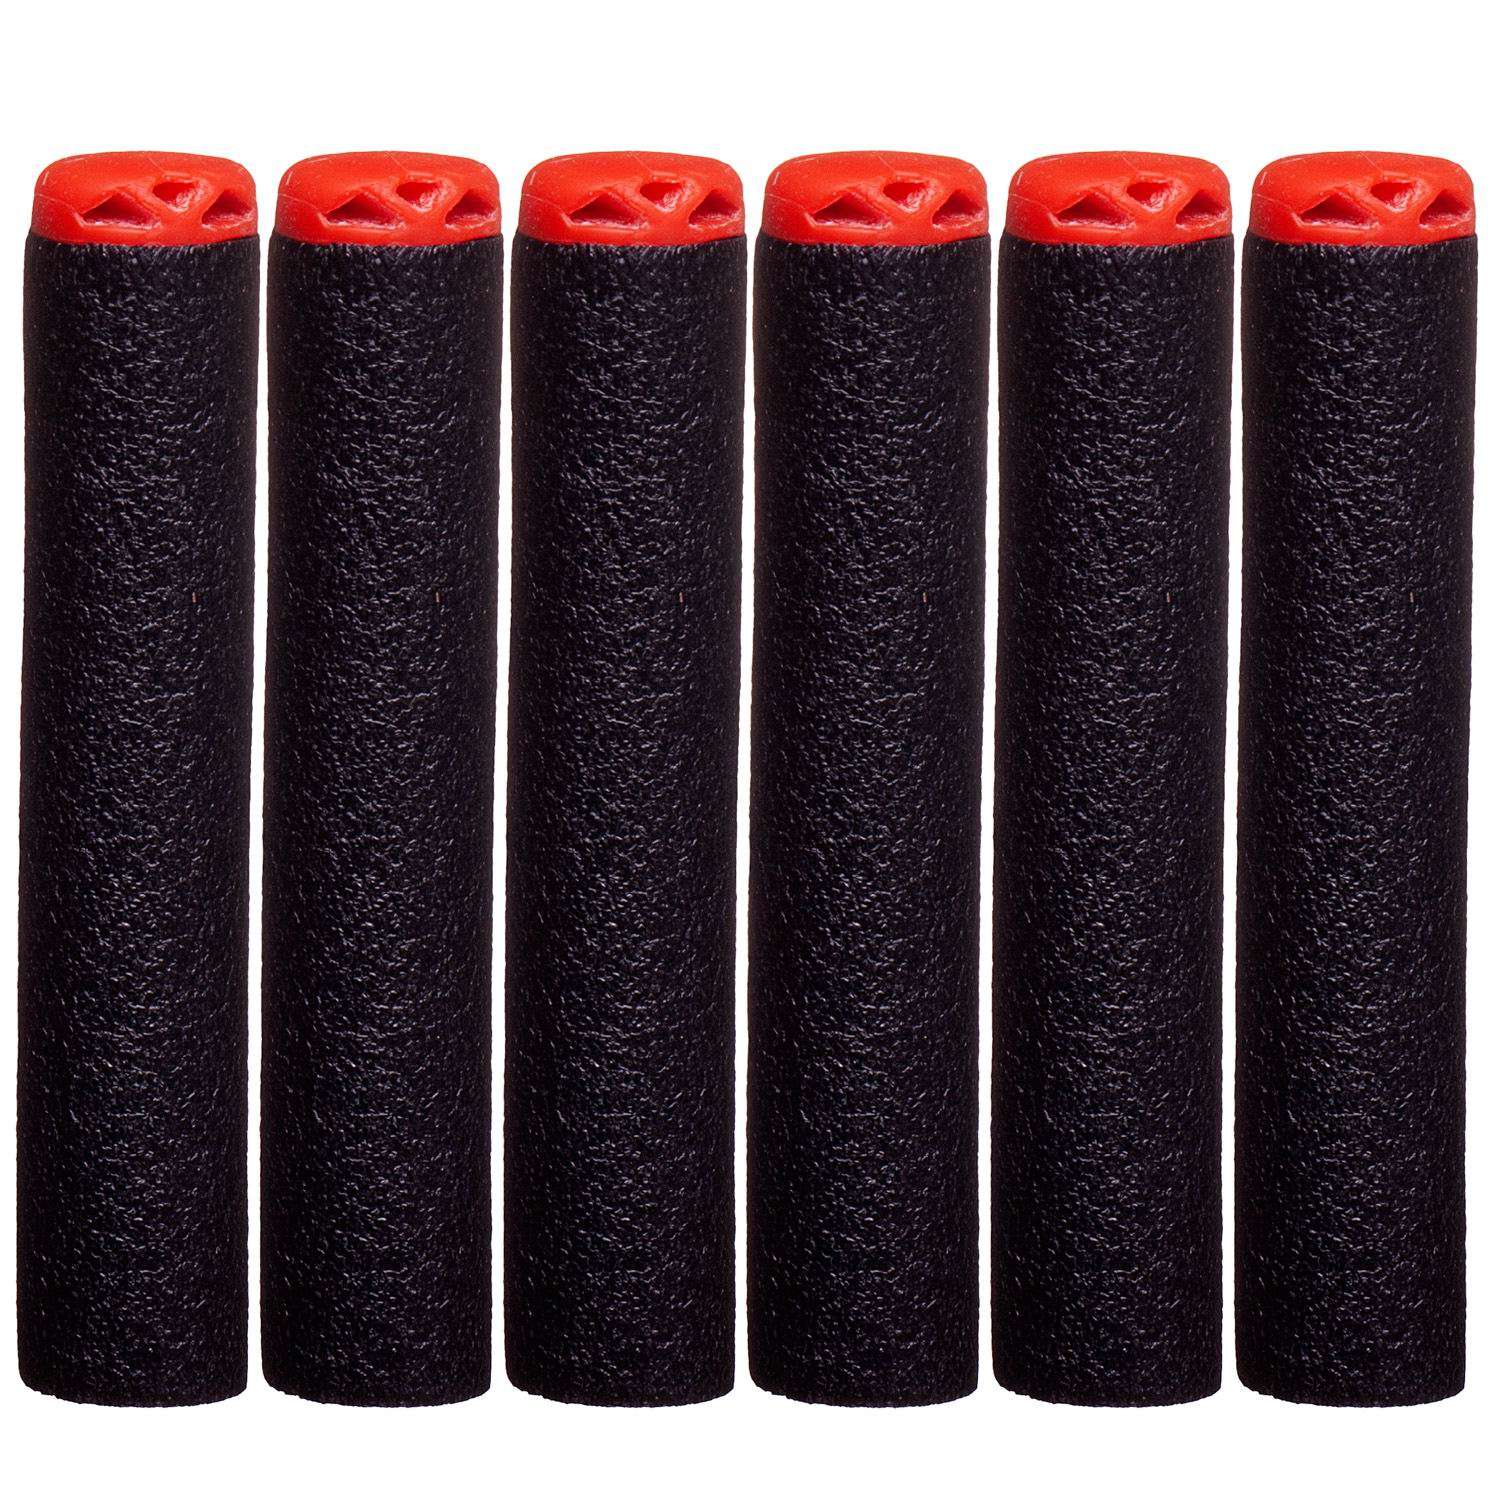 Мегабластер ABTOYS красно черный с 6 мягкими пулями - фото 6